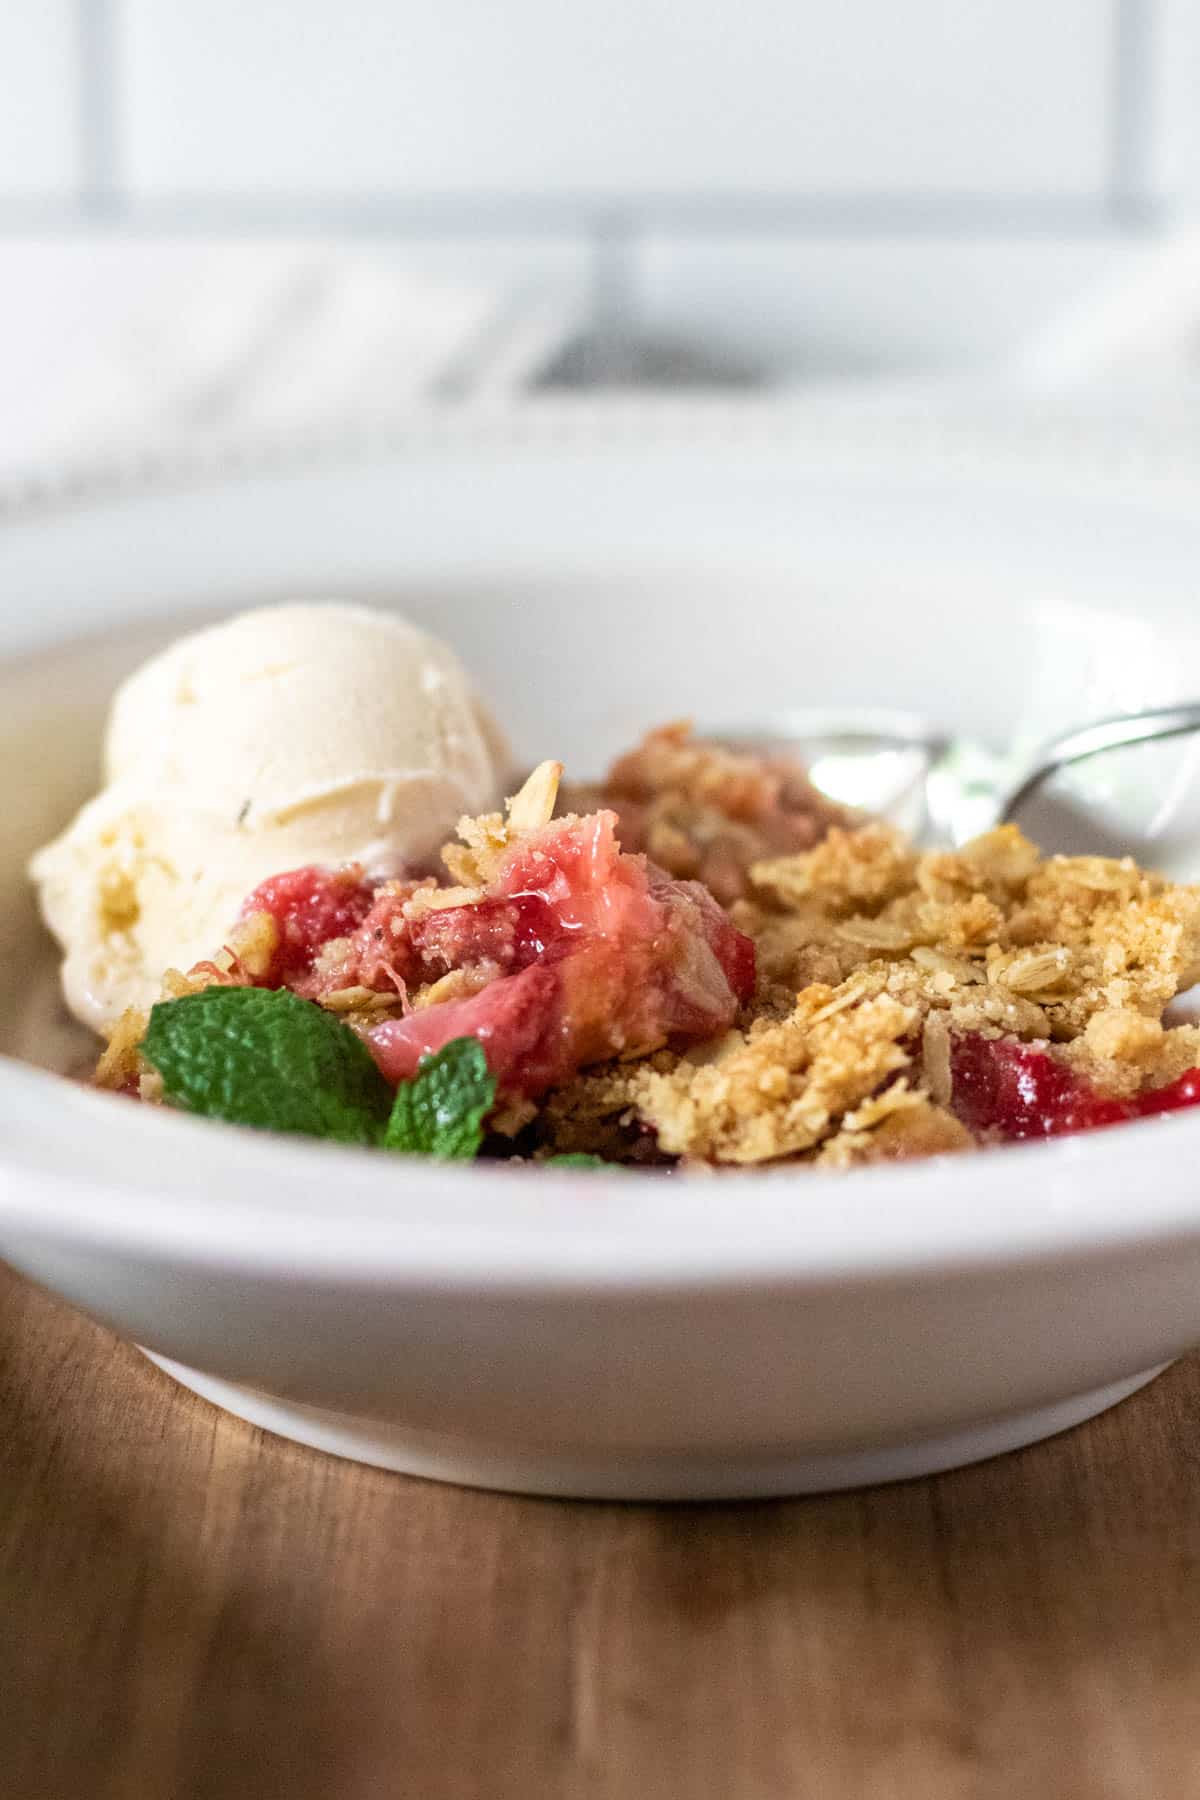 Strawberry rhubarb crisp in bowl with ice cream.